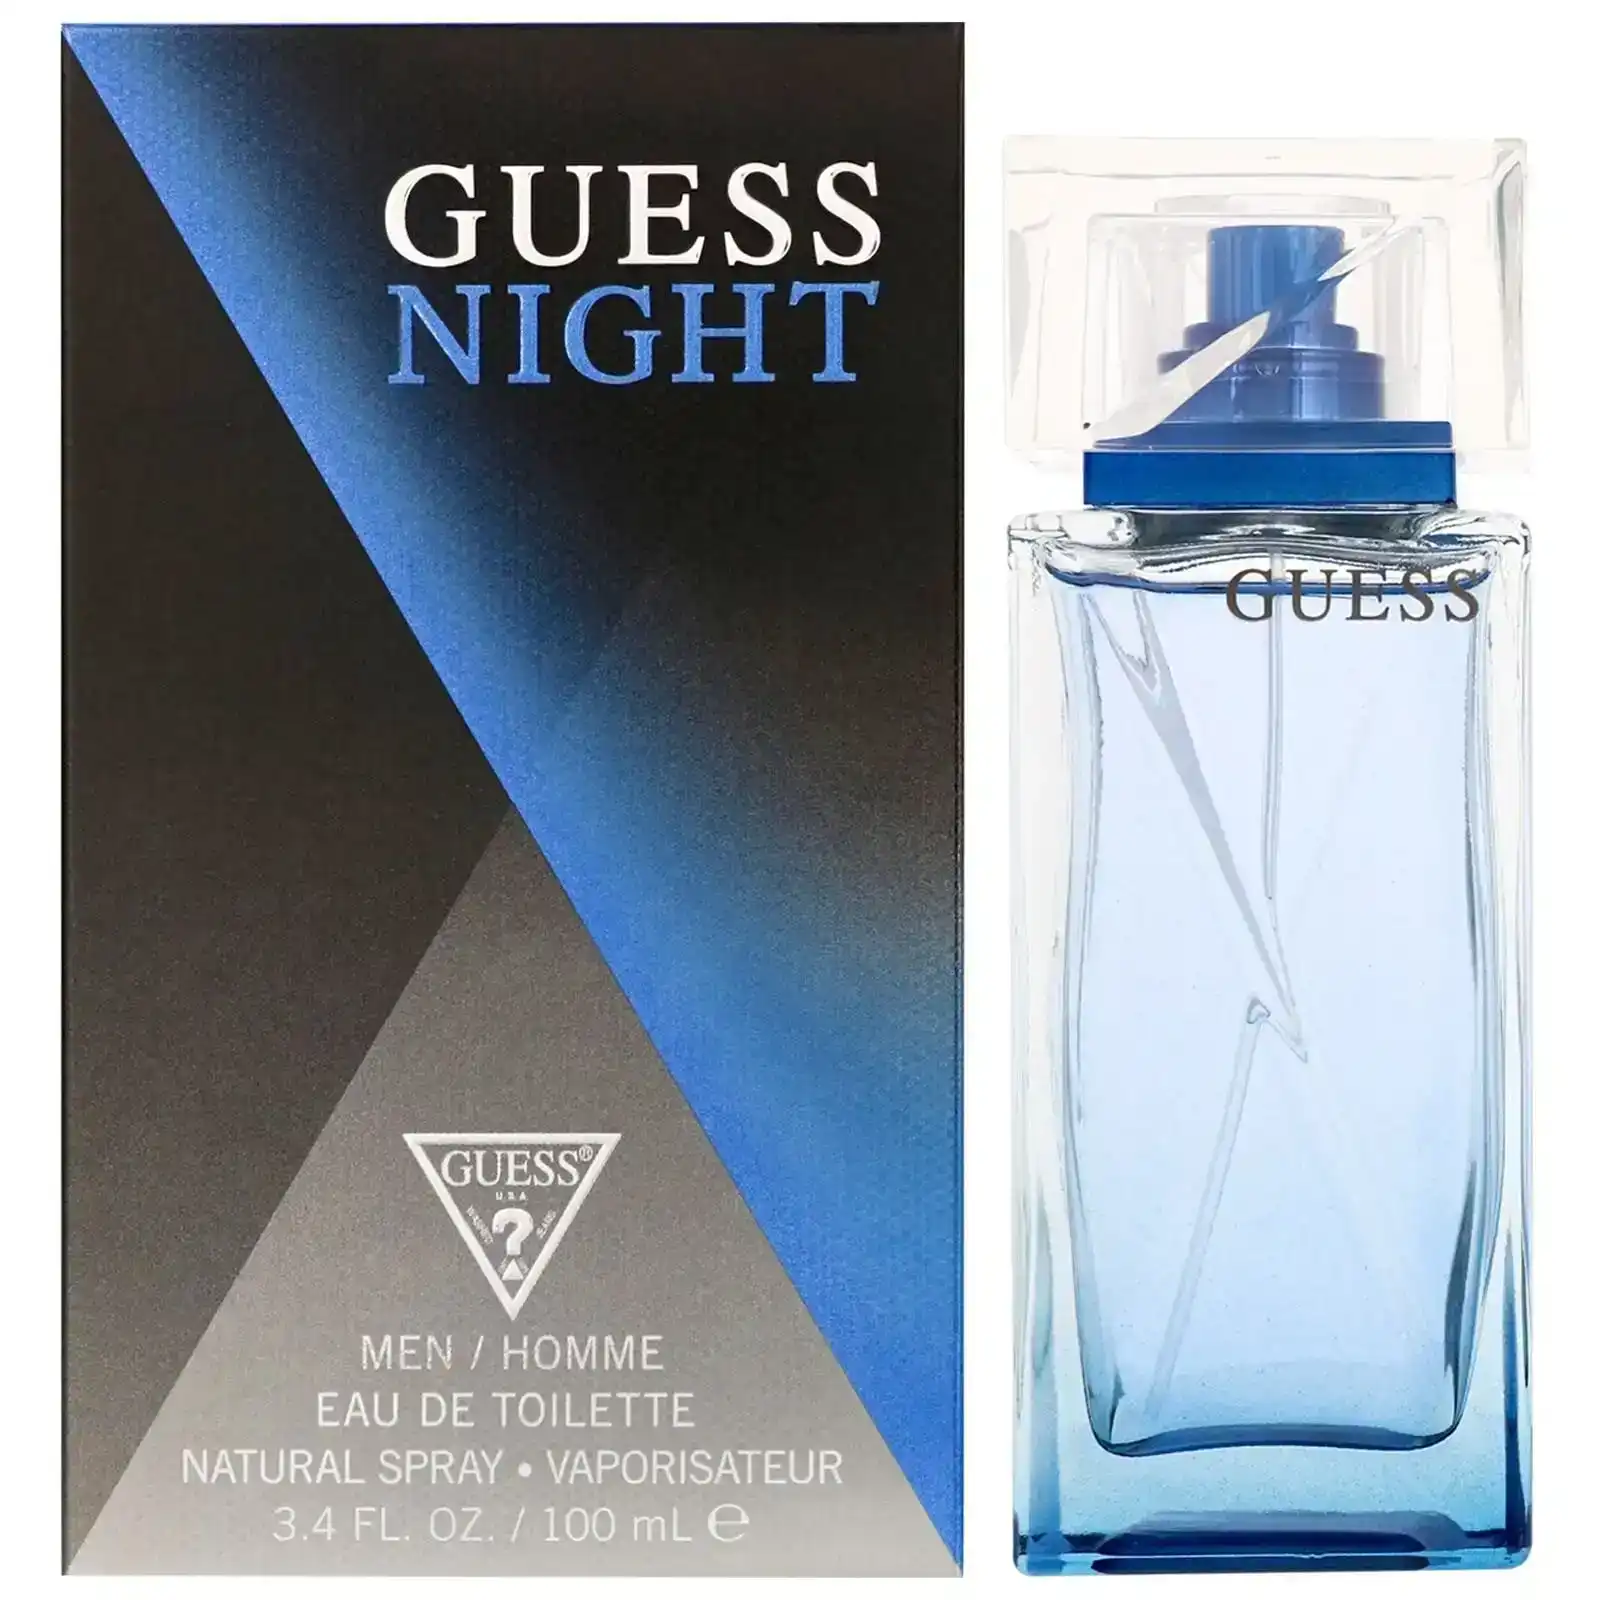 Guess Night Men 100mL Eau De Toilette Fragrance Spray